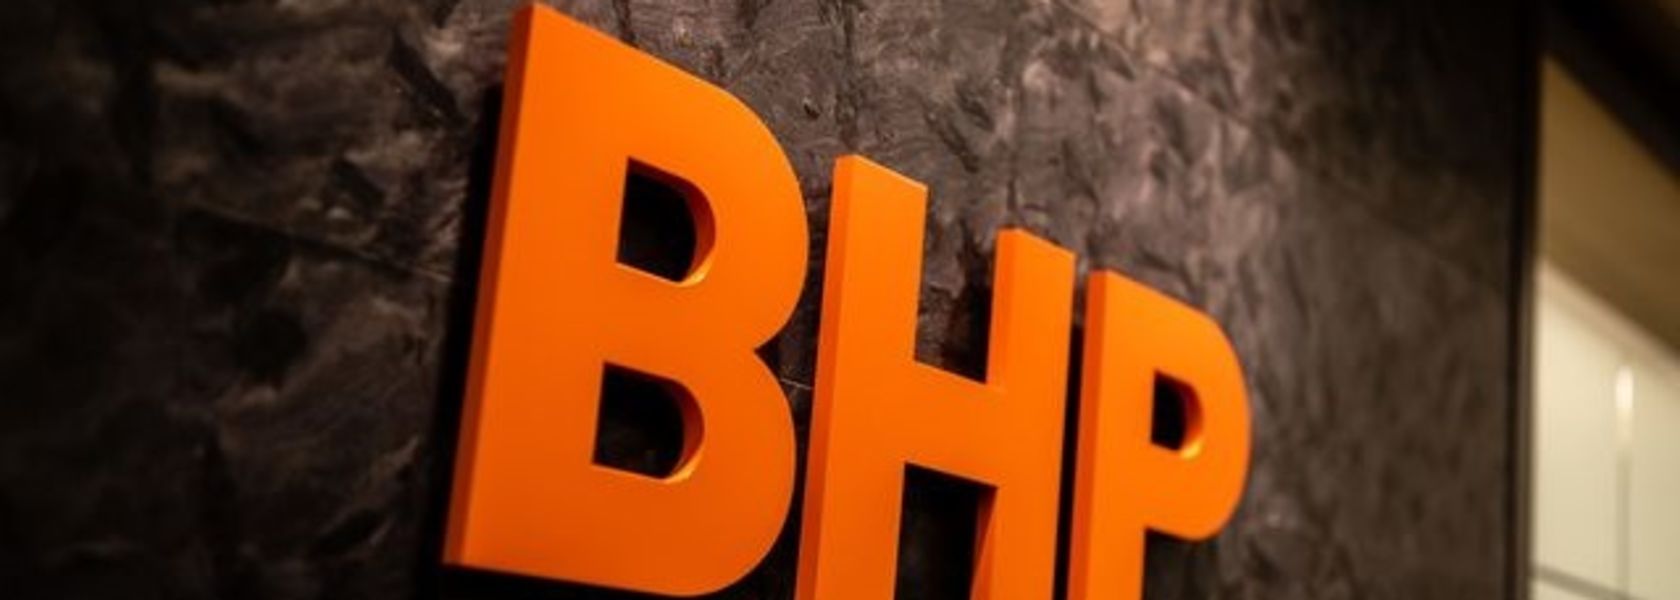 BHP decade a final dividend of1.75 dollars per share